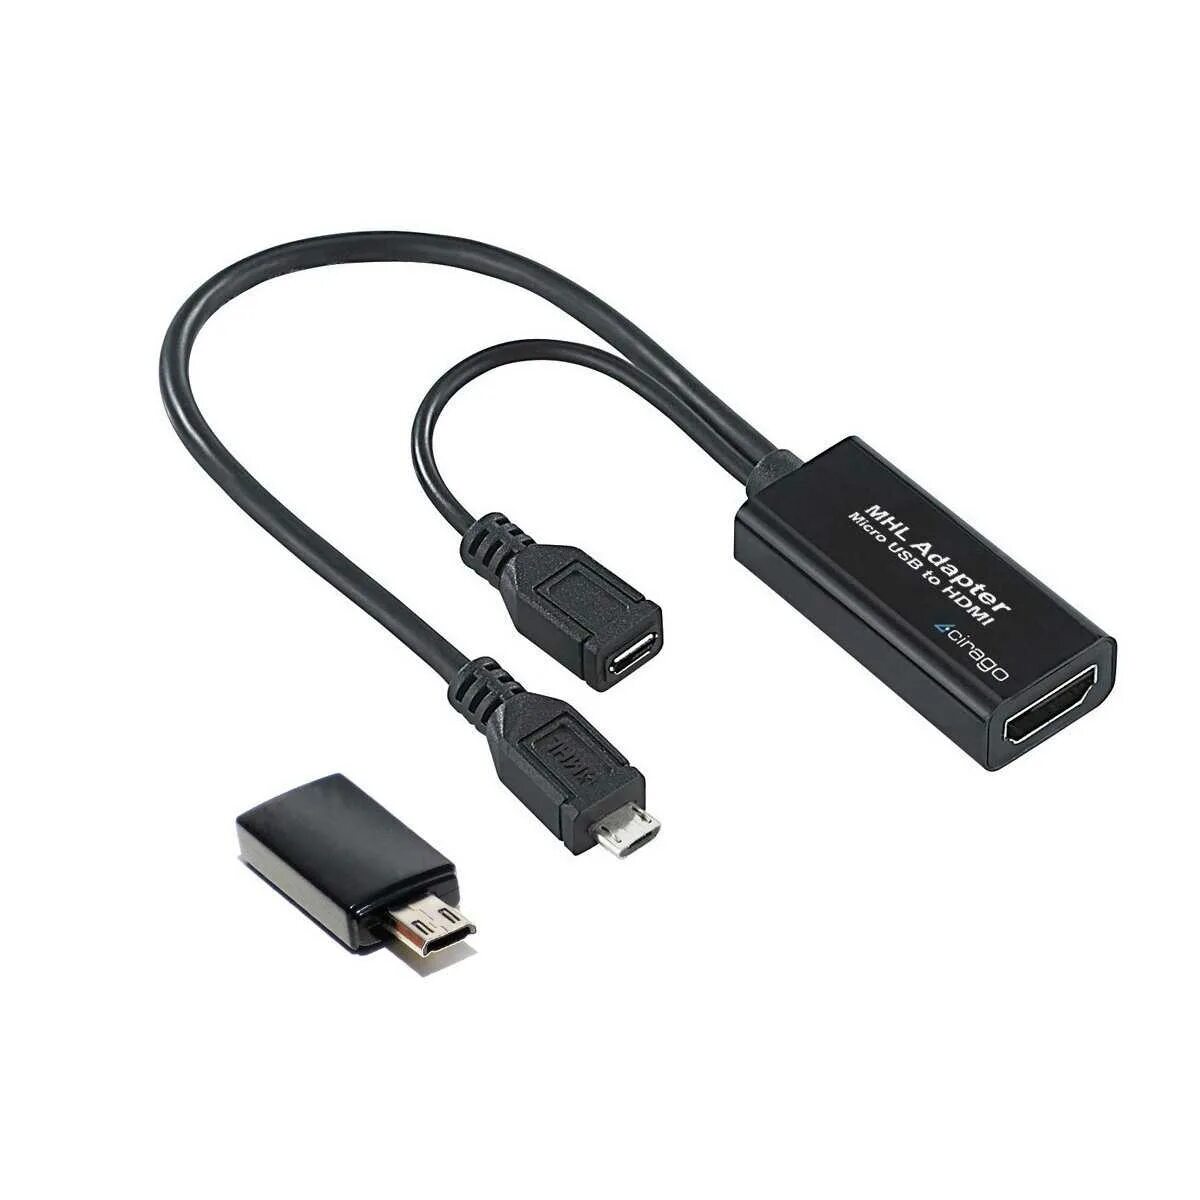 Айфон к телевизору через usb. Кабель USB-HDMI (подключить смартфон к телевизору). Блютуз адаптер для телевизора самсунг. Переходник с юсб на HDMI для телевизора. HDMI вай фай переходник.